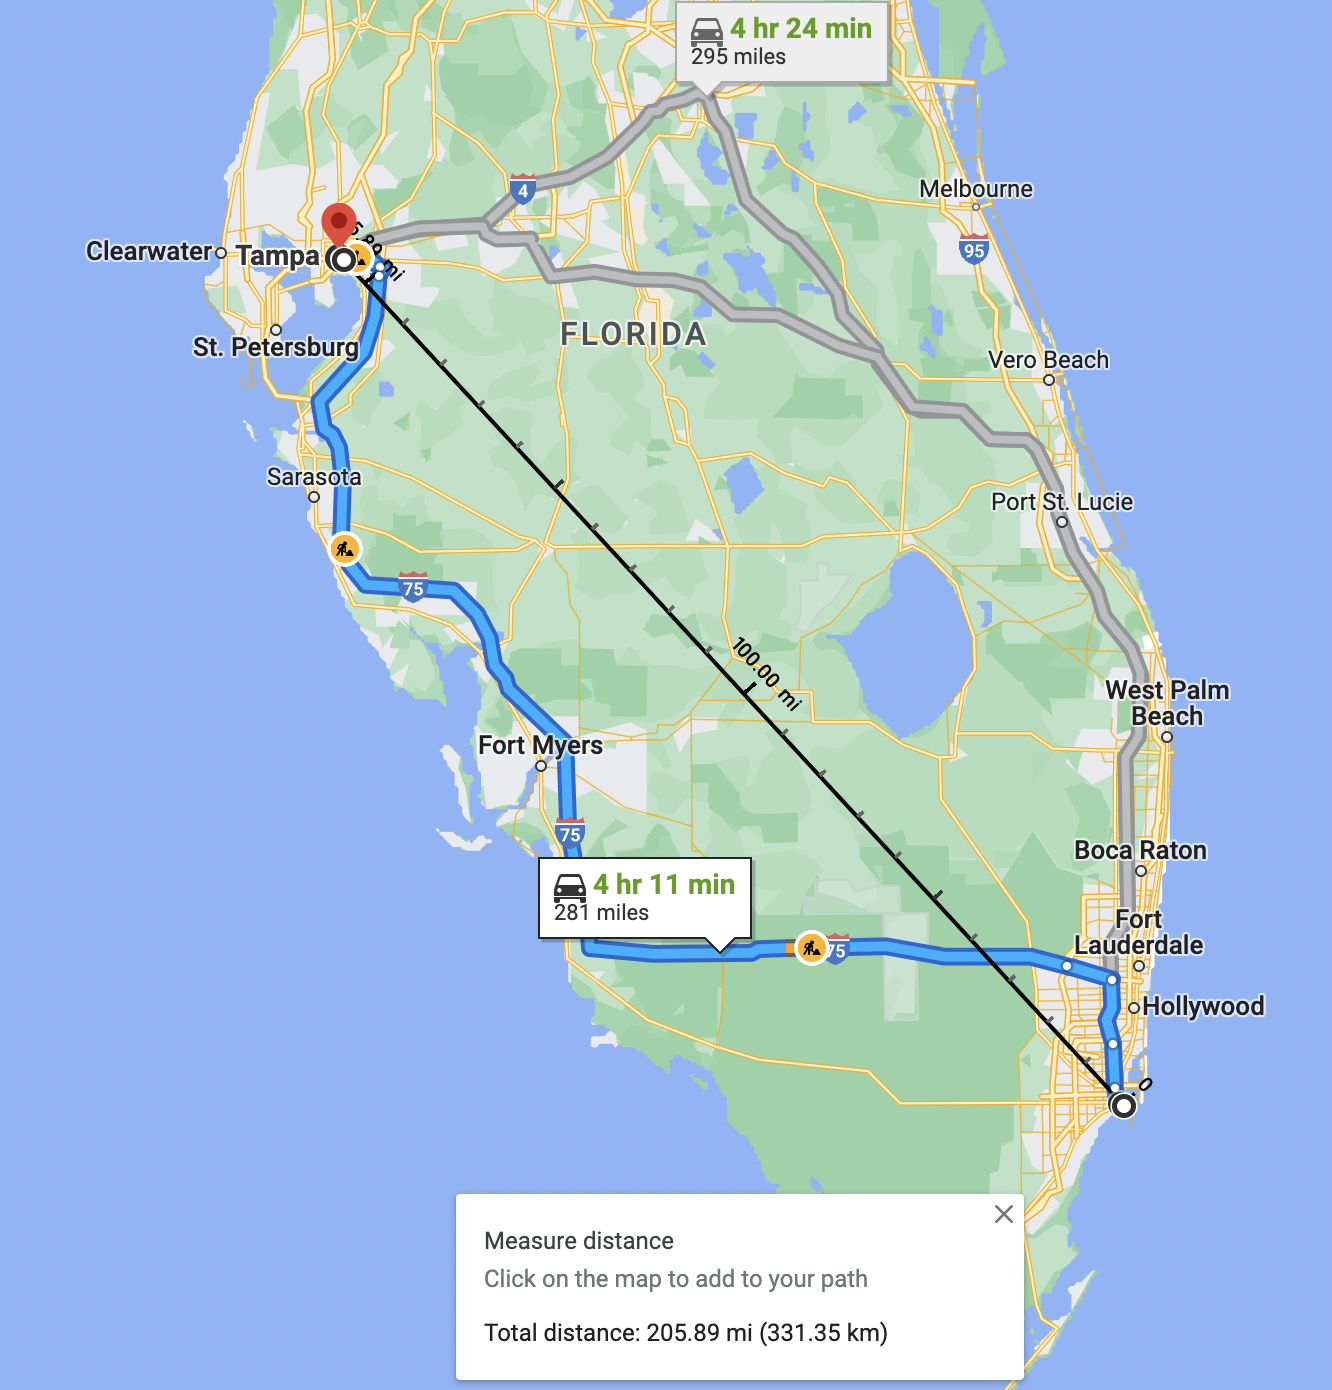 Google Maps Measure distance